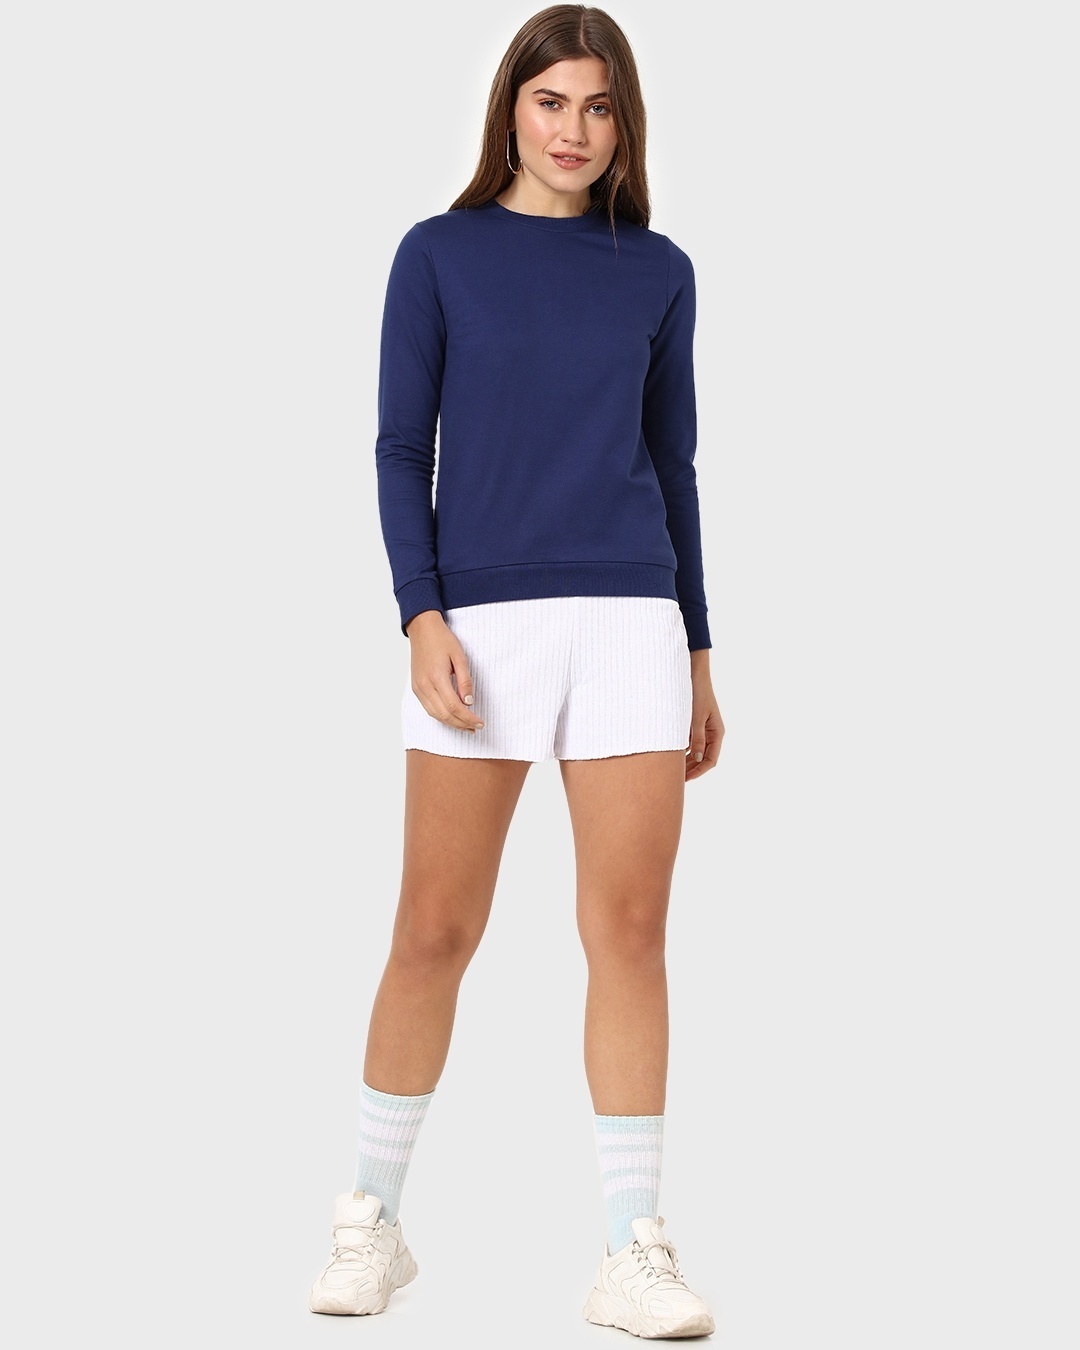 Shop Galaxy Blue Fleece Light Sweatshirt